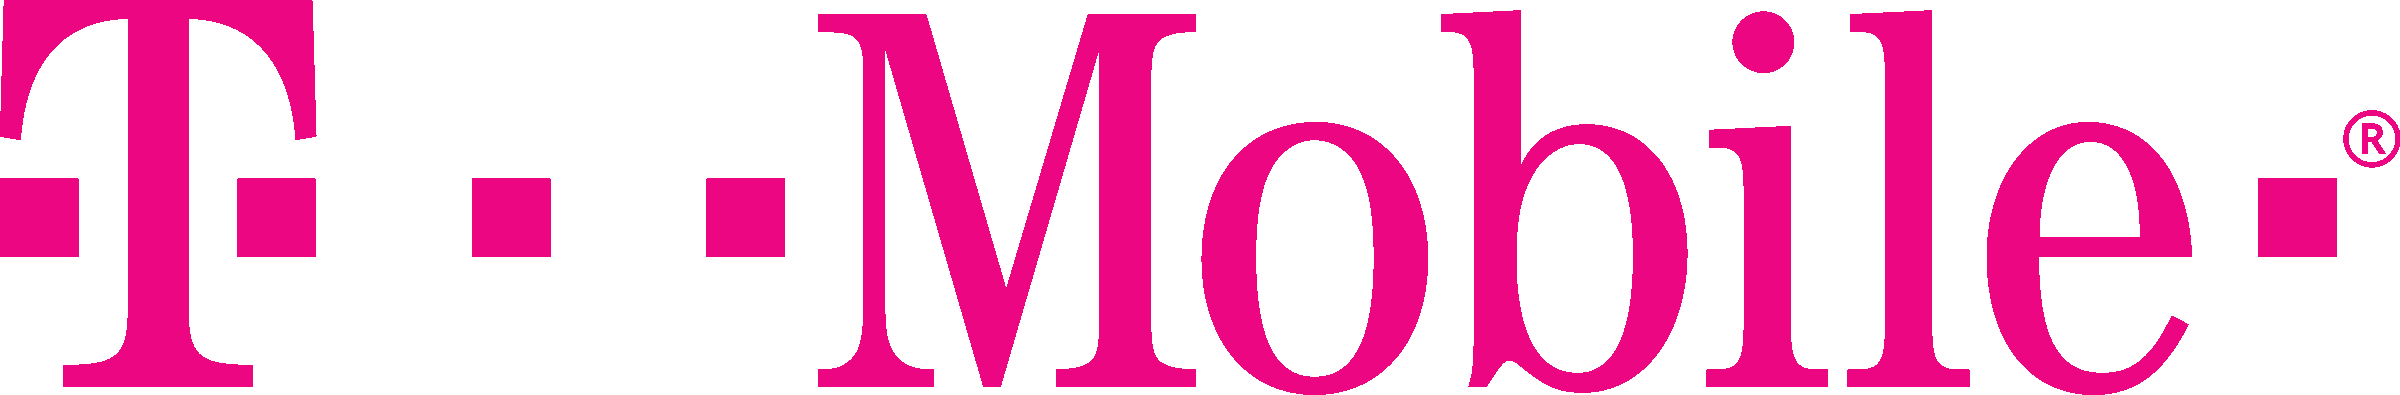 T-Mobile-Logo-Pink